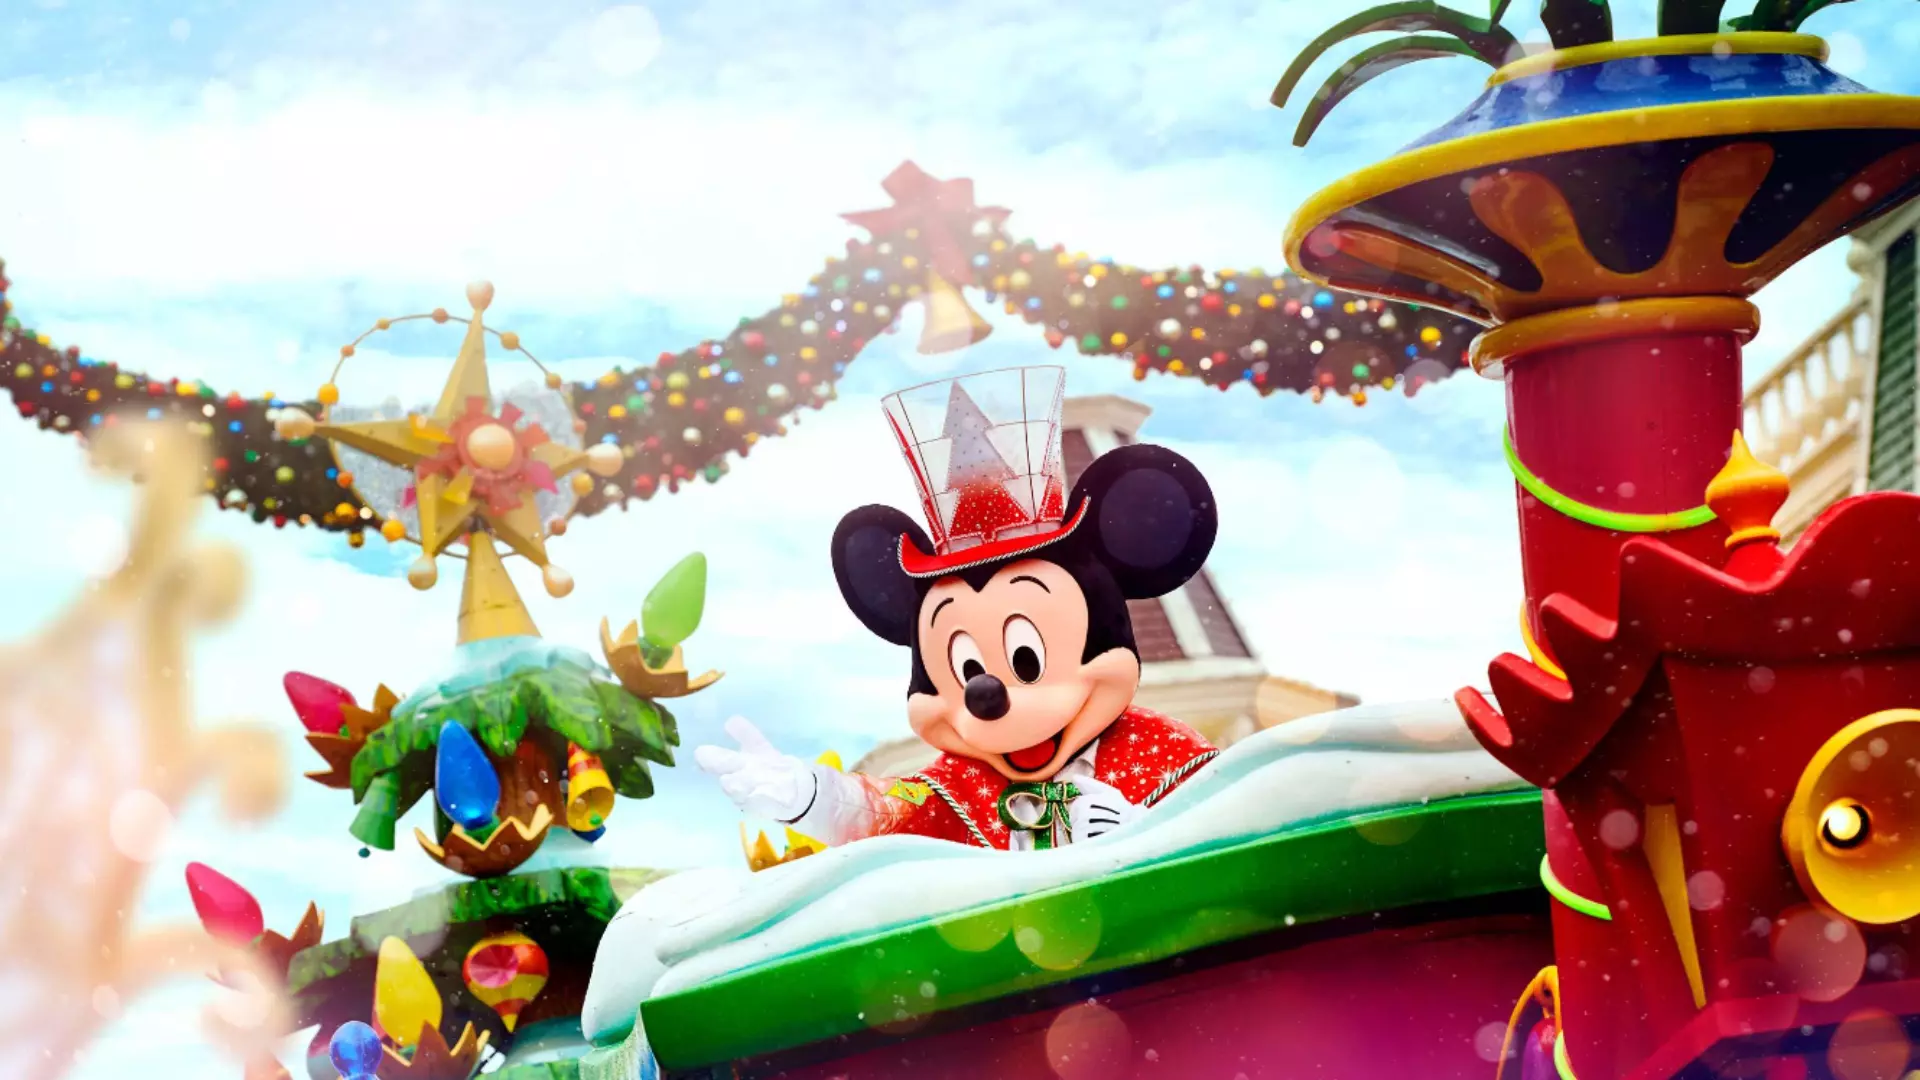 Mickey et sa parade étincelante de noël - DisneylandParis